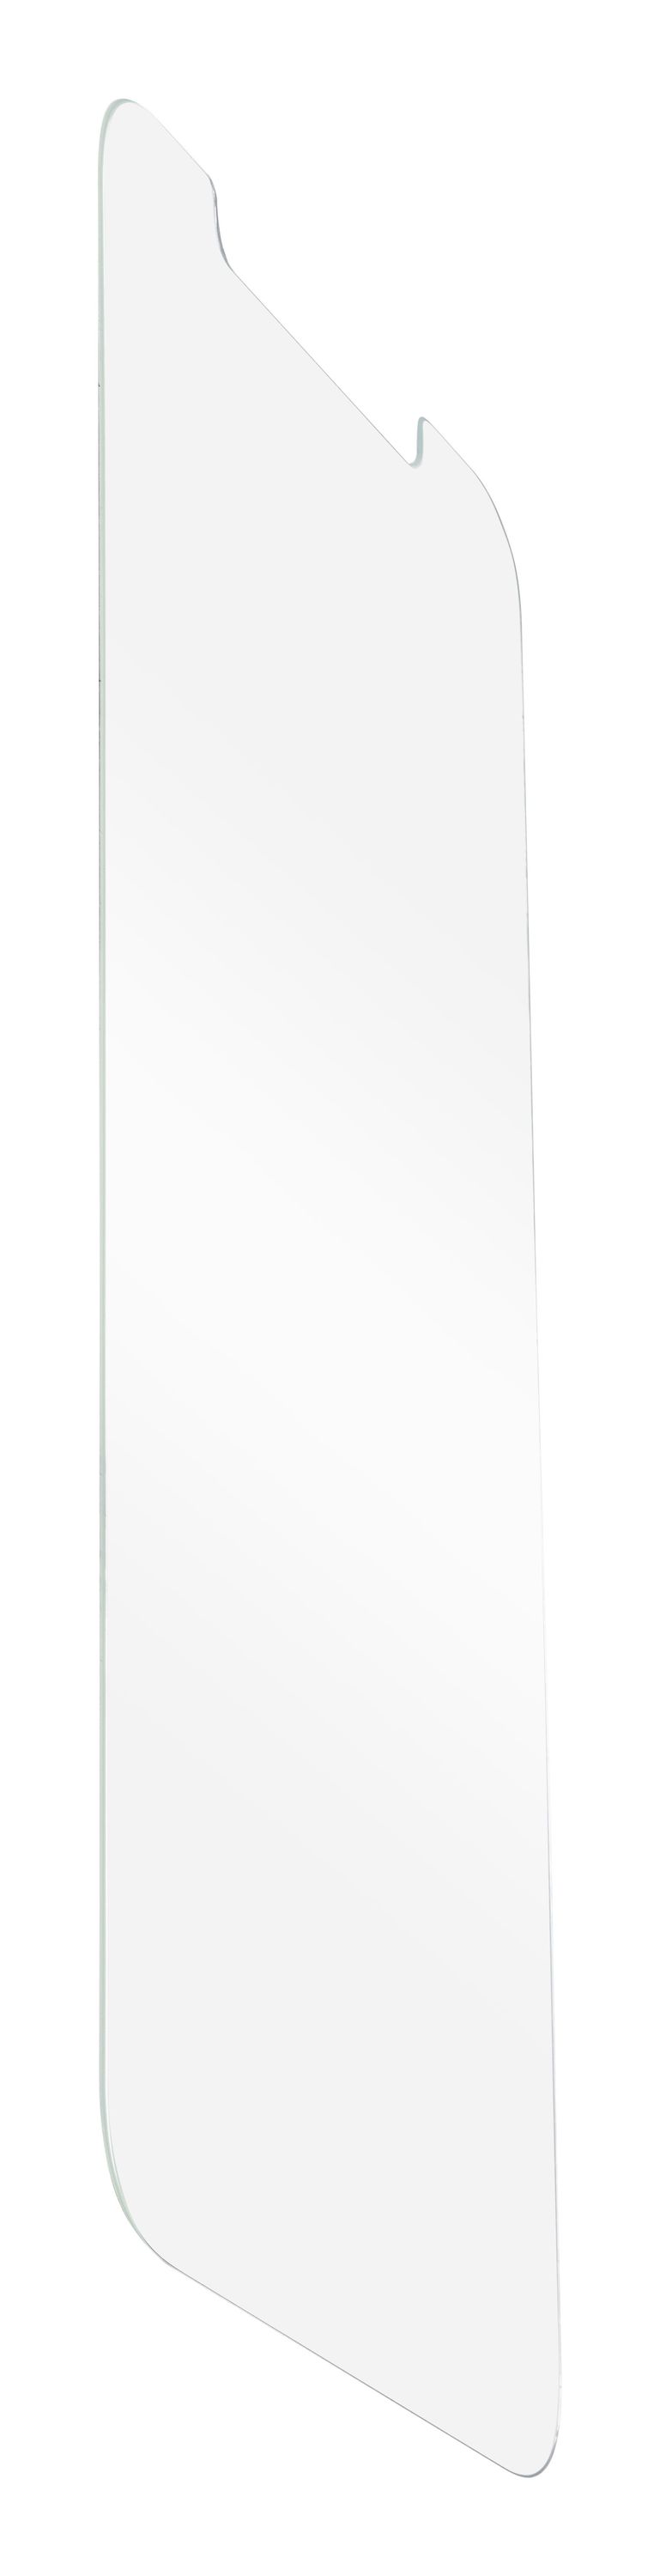 iPhone 13 Pro Max, prot. d'cran tetra glass, transparent